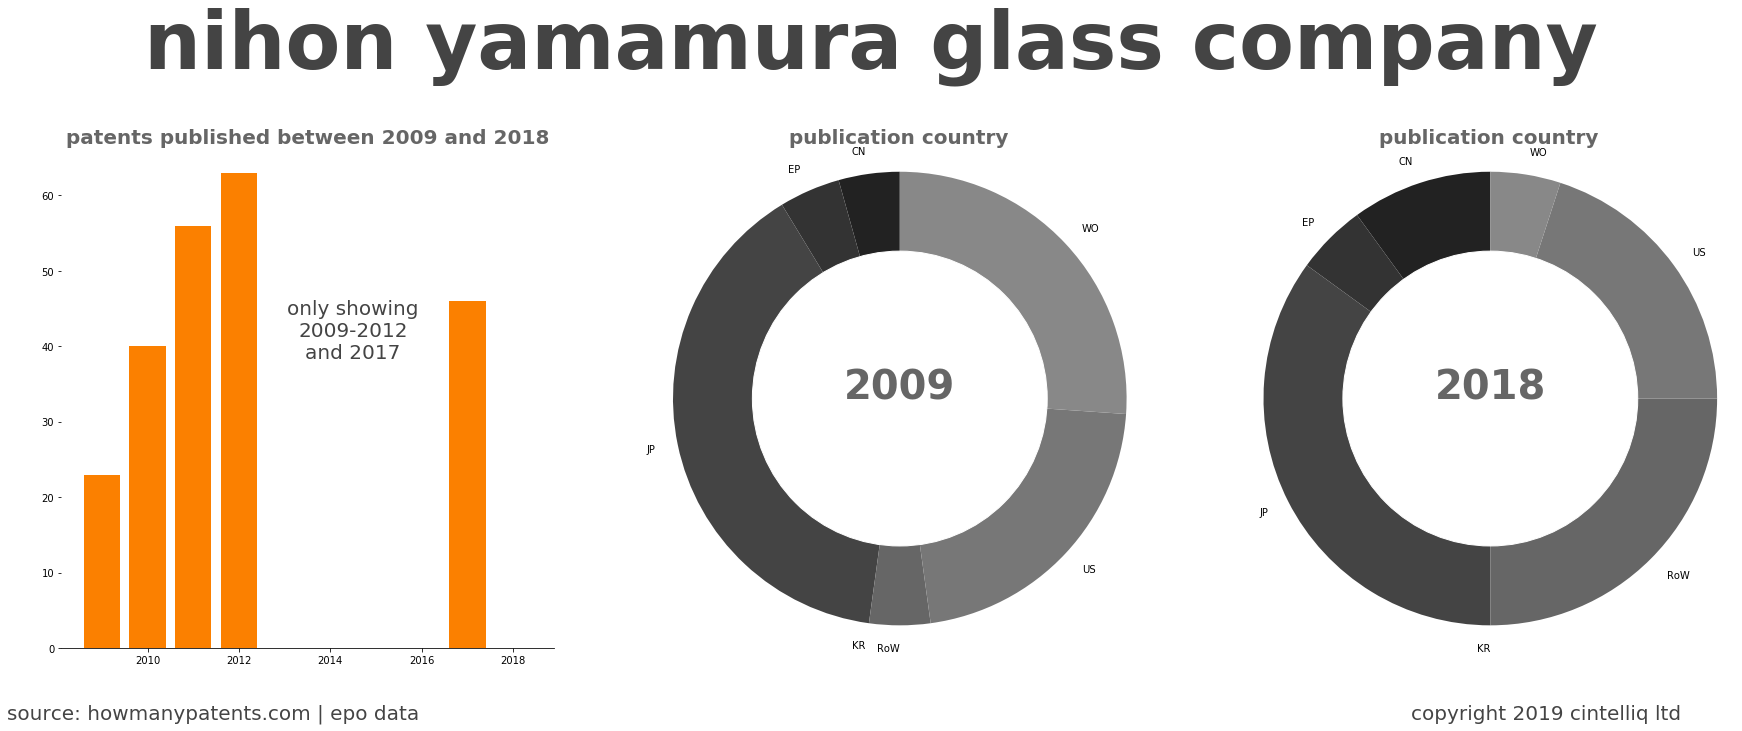 summary of patents for Nihon Yamamura Glass Company